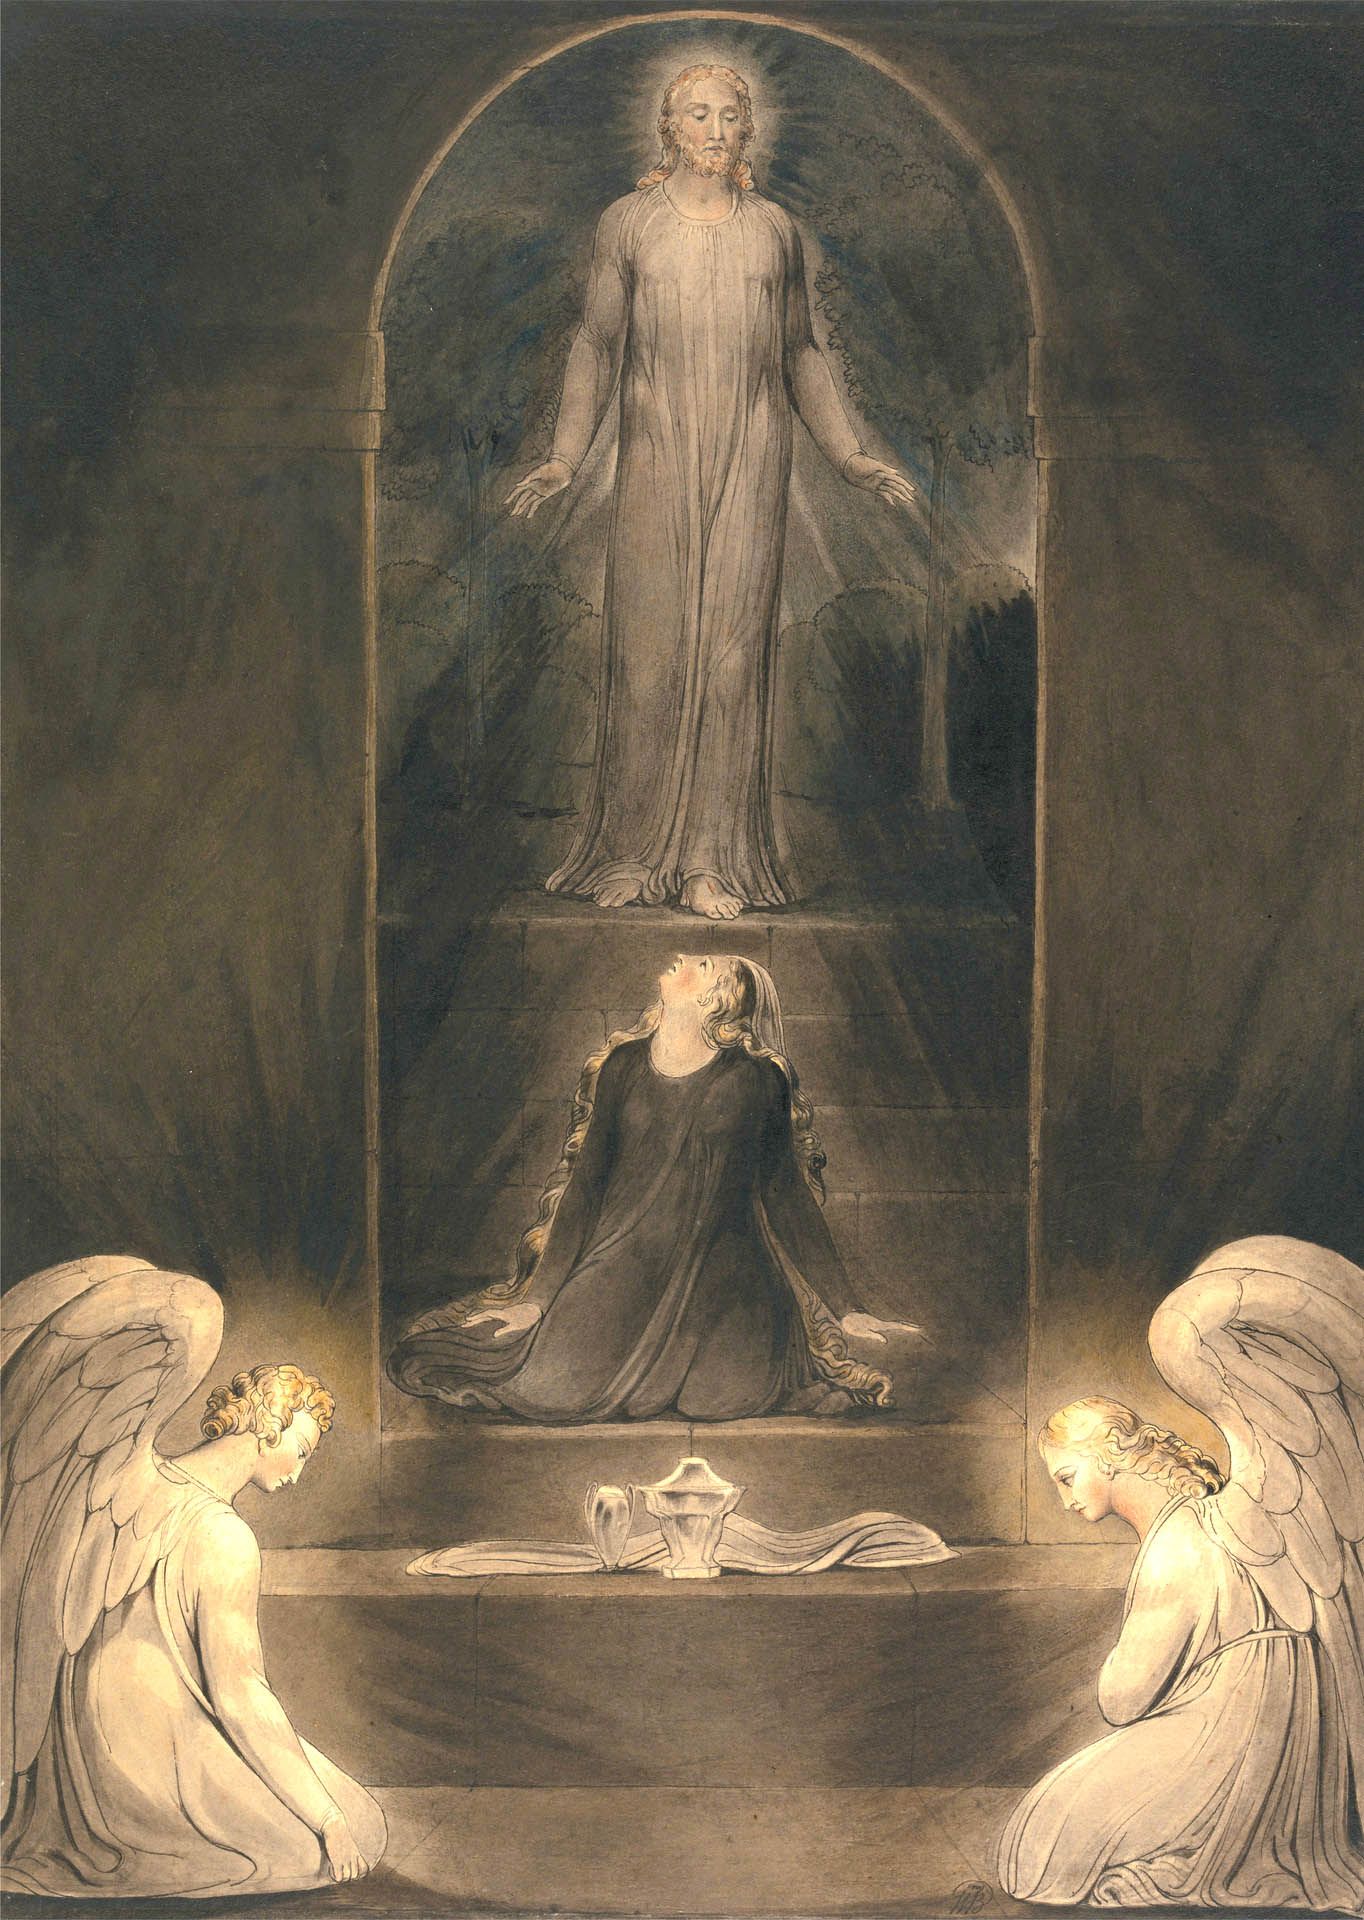 Resurrection by William Blake